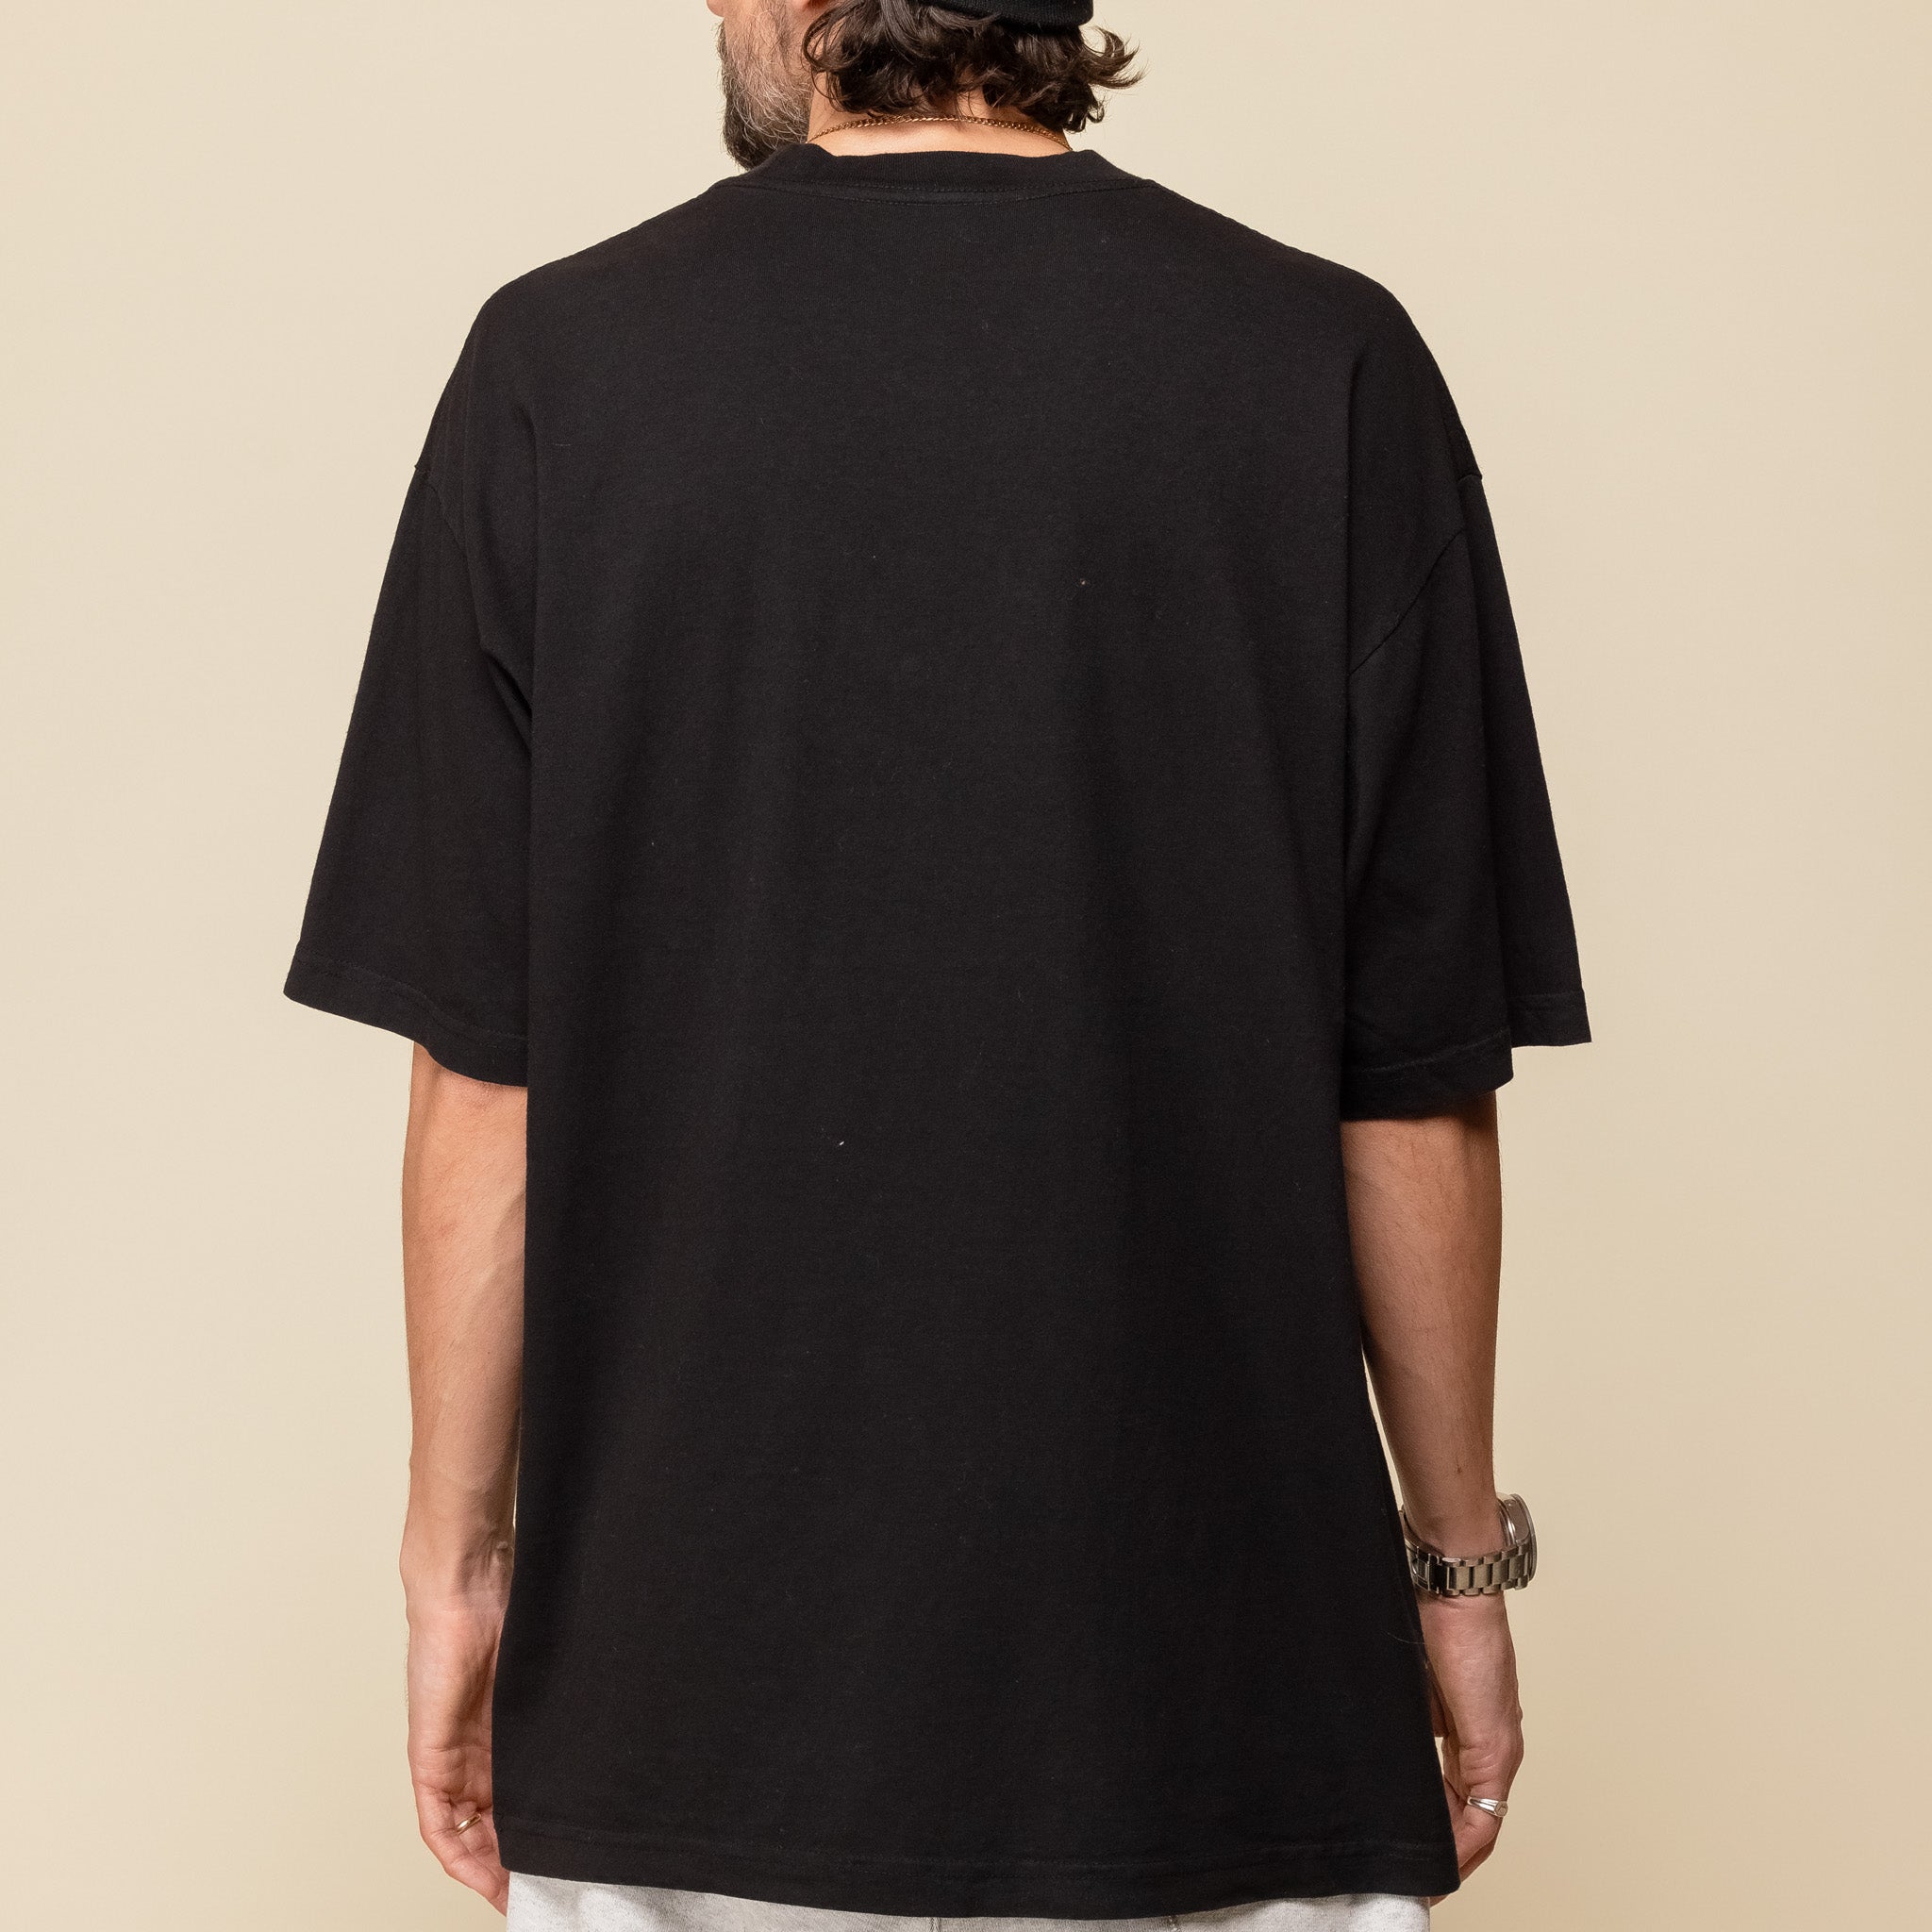 Cease - Shoulder Print T-Shirt - Black "ceaseceasecease.com" "ceaseceasecease" "cease stockist" "dan pacitti"